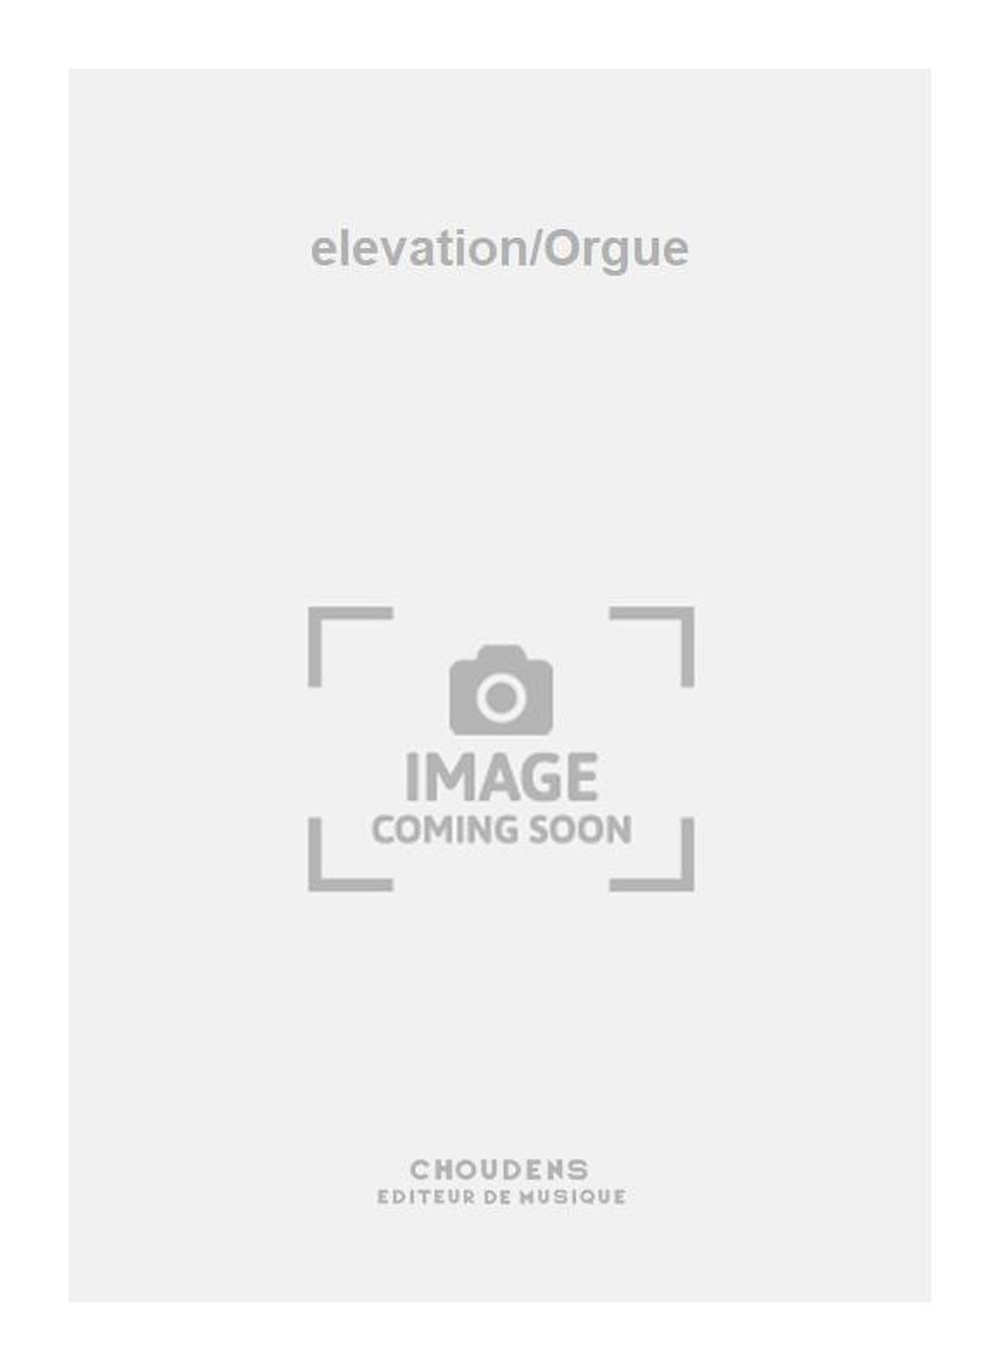 Charles Gounod: elevation/Orgue